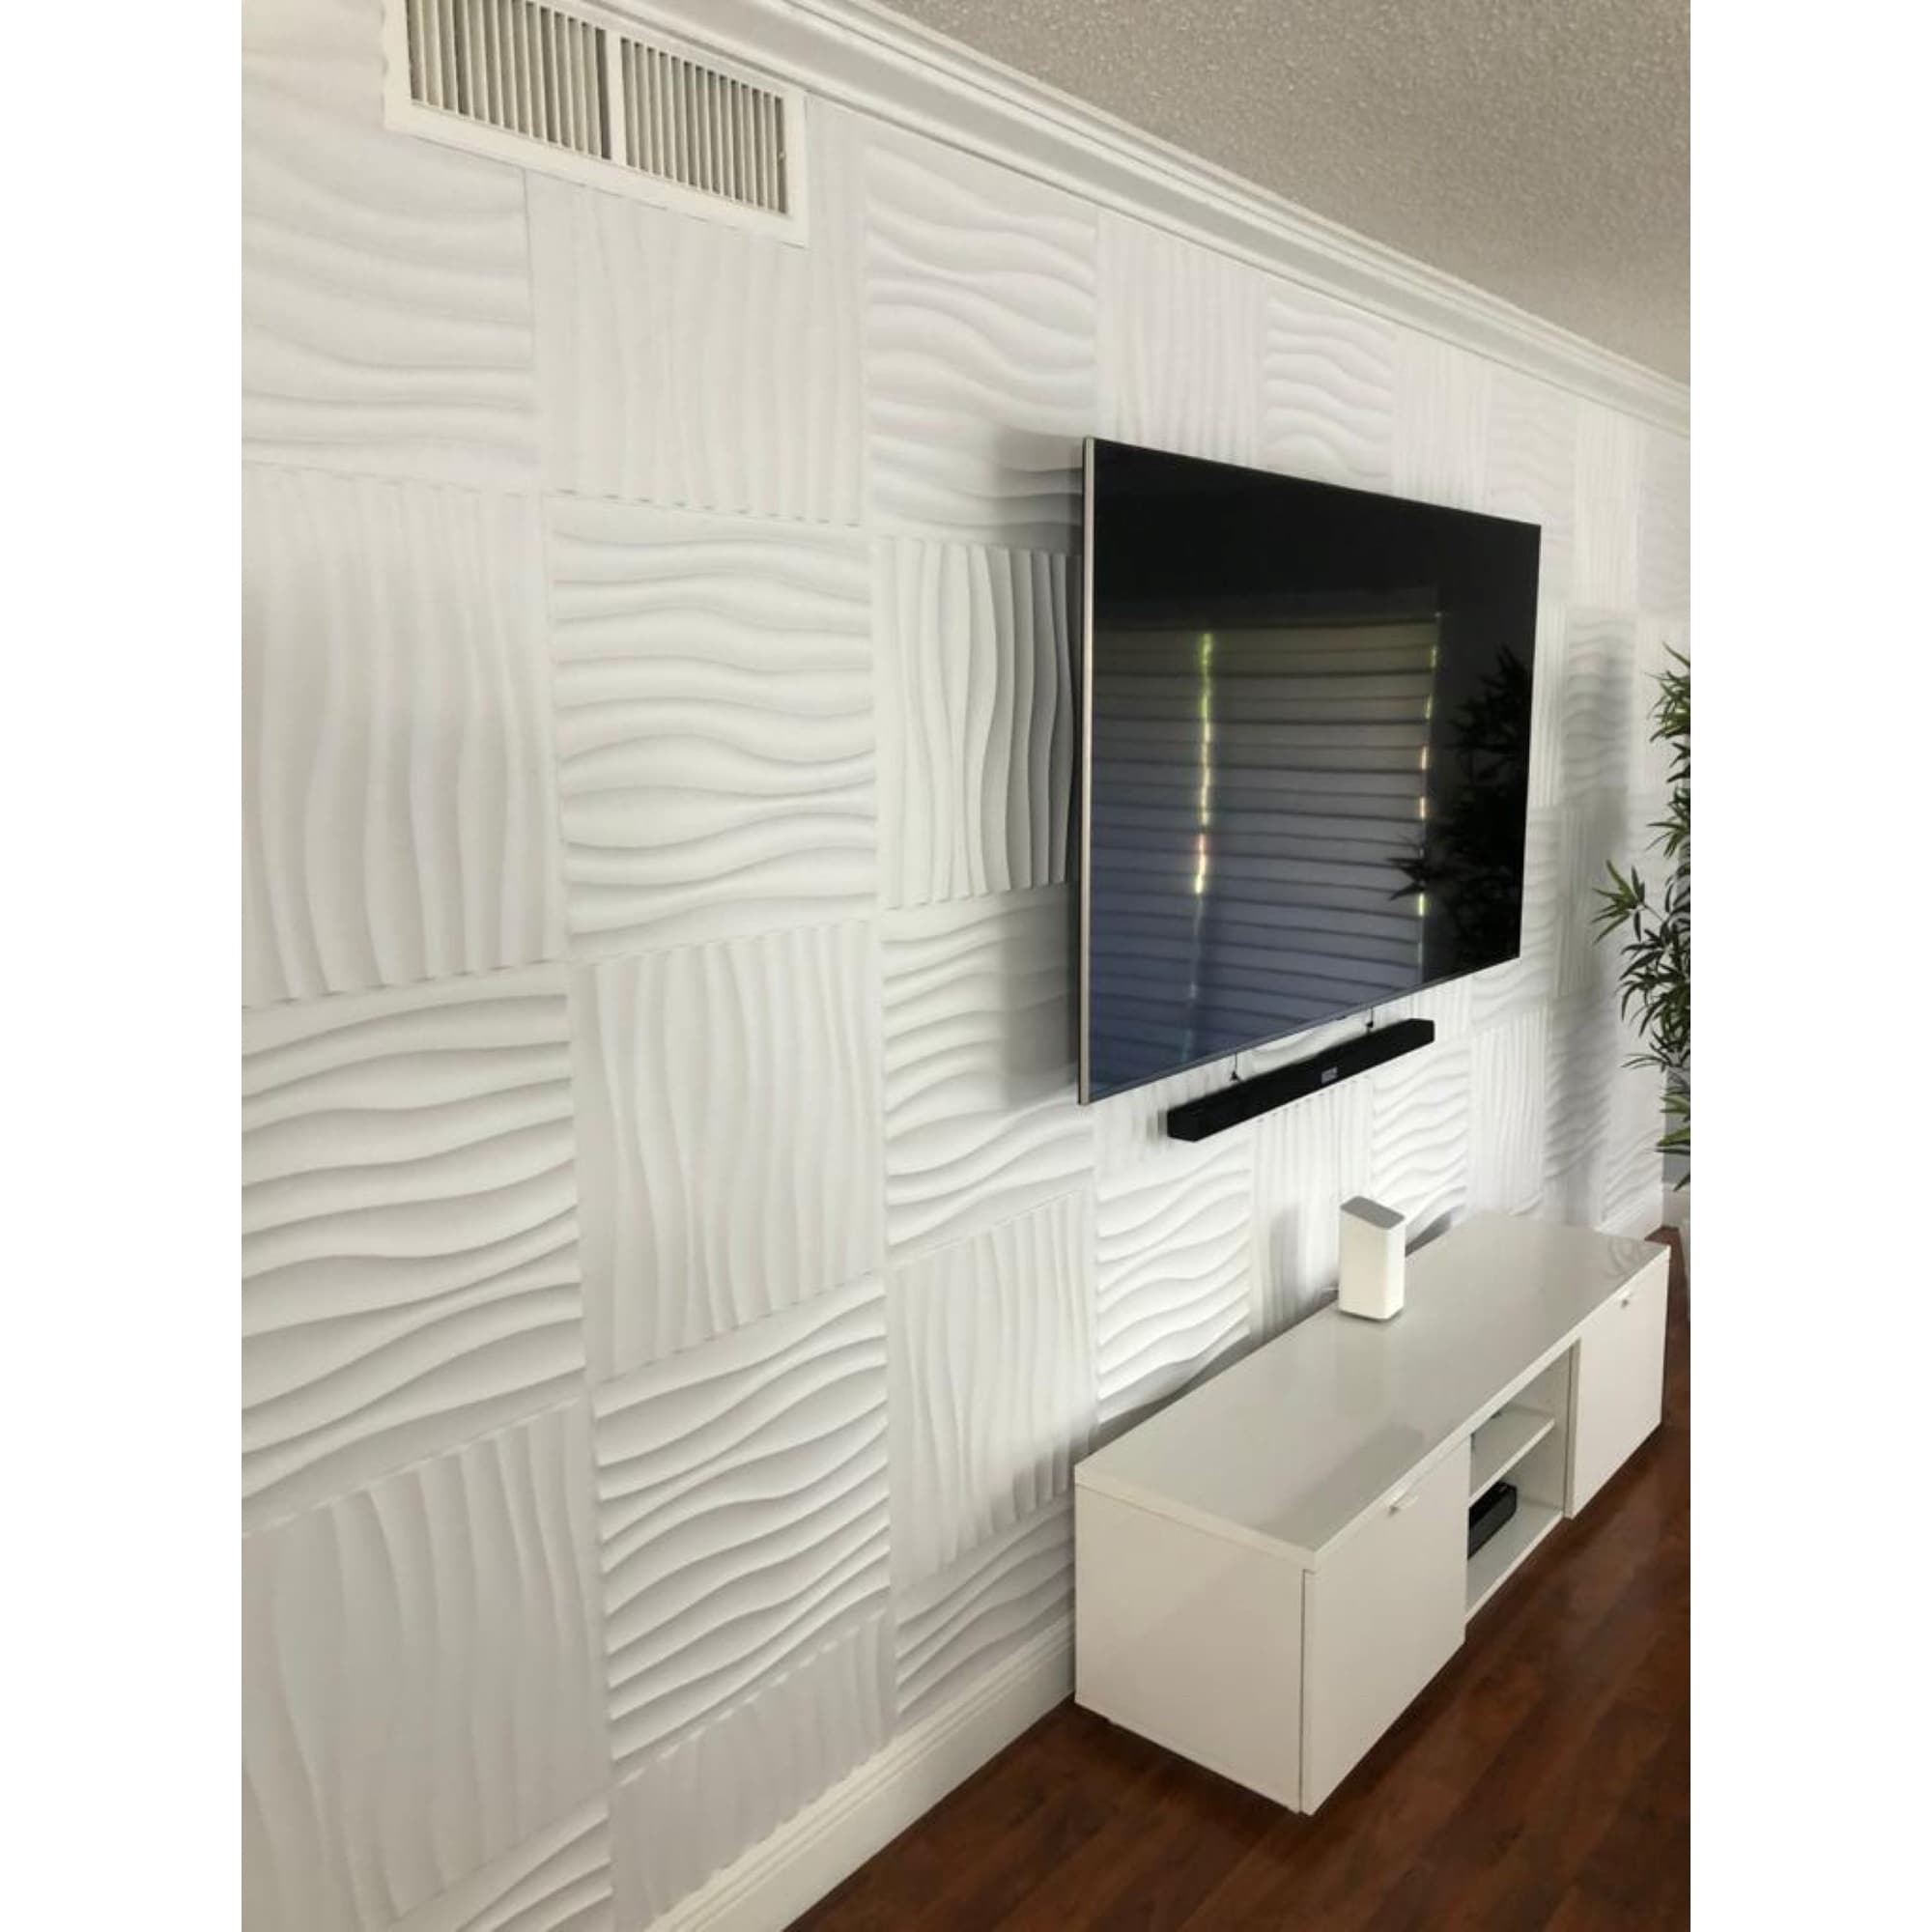 Art3d 3D Wall Panels PVC Brick Design (32 Sq.Ft) - On Sale - Bed Bath &  Beyond - 31681536